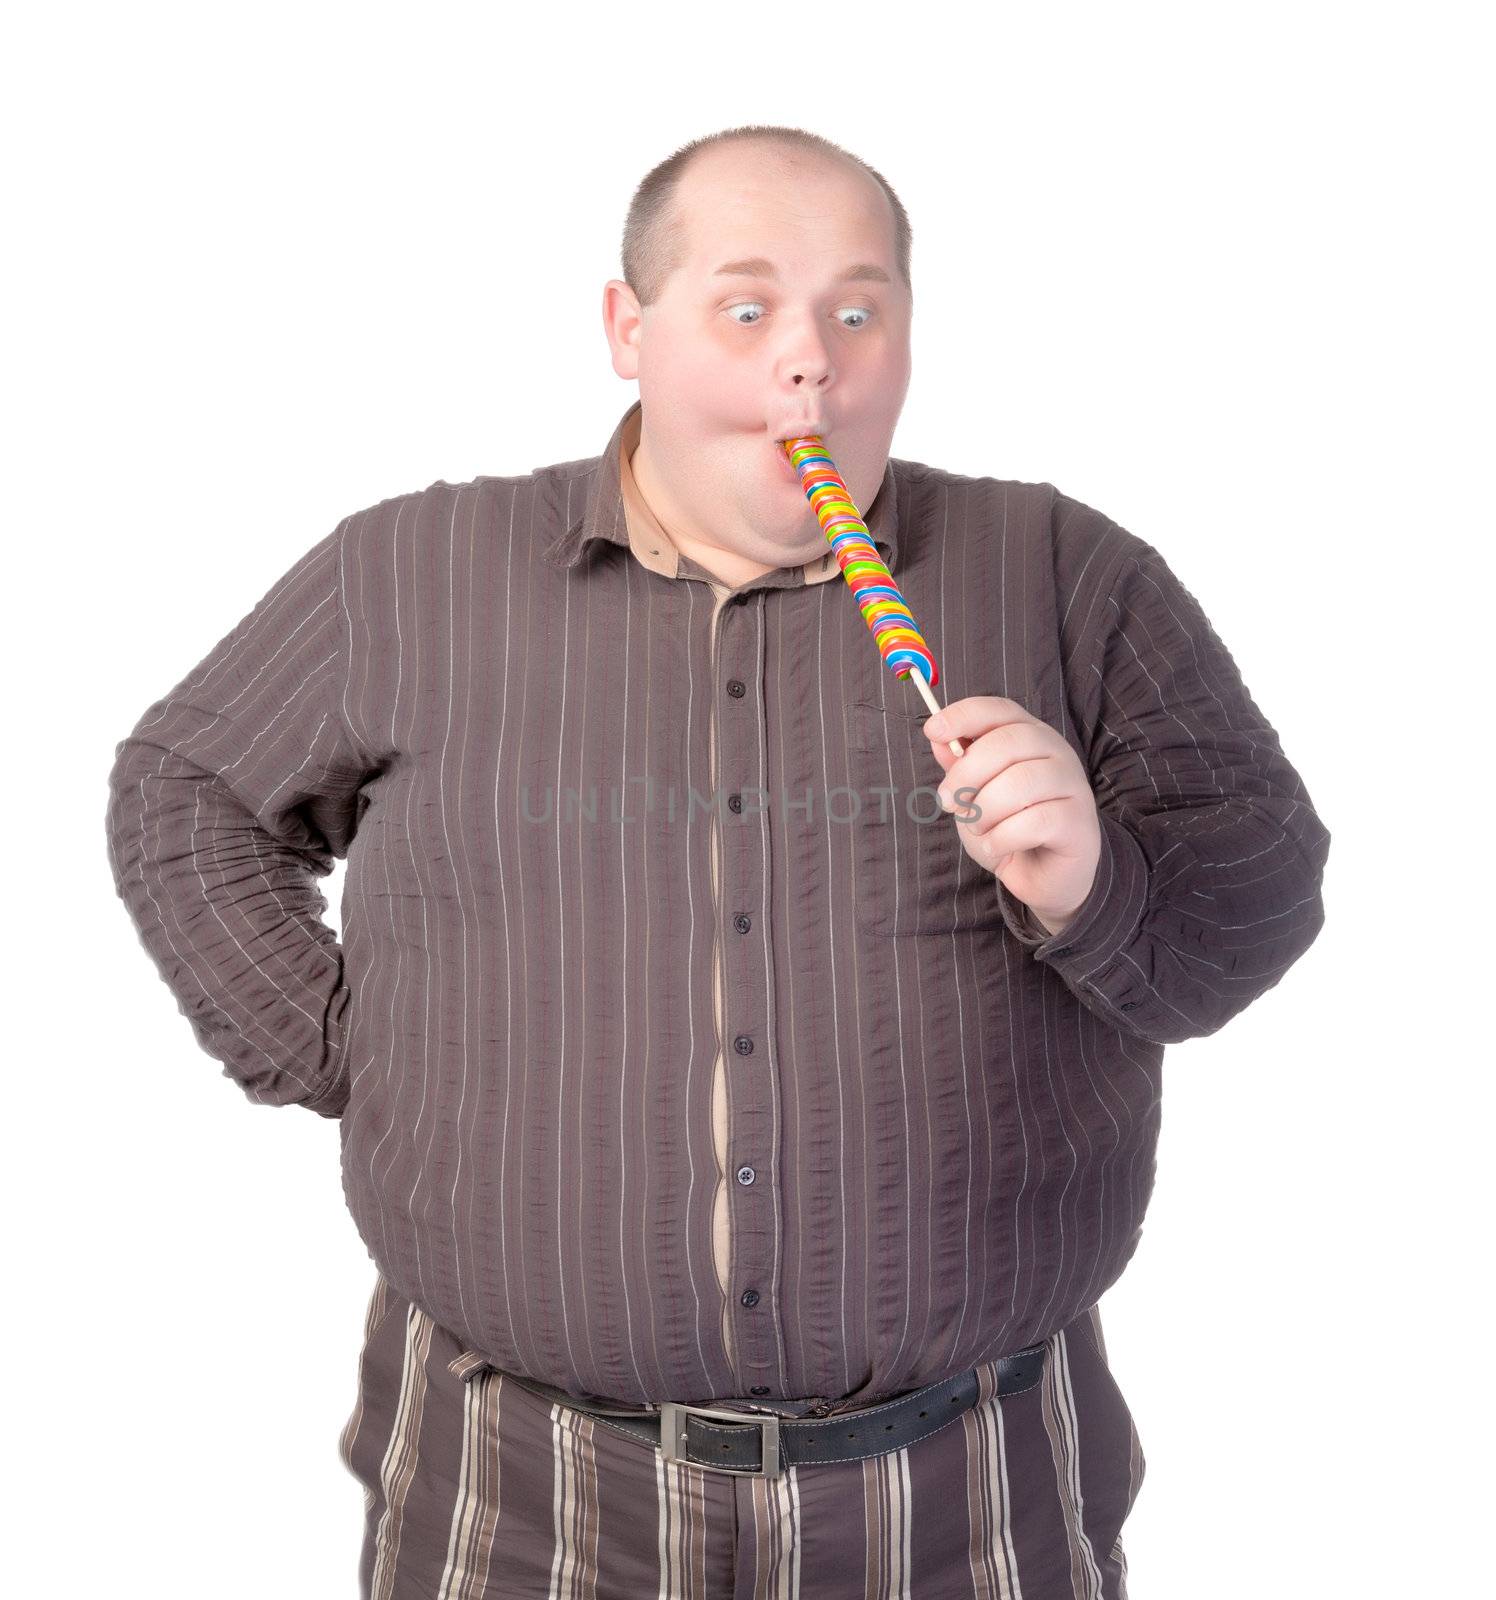 Fat man enjoying a lollipop by Discovod